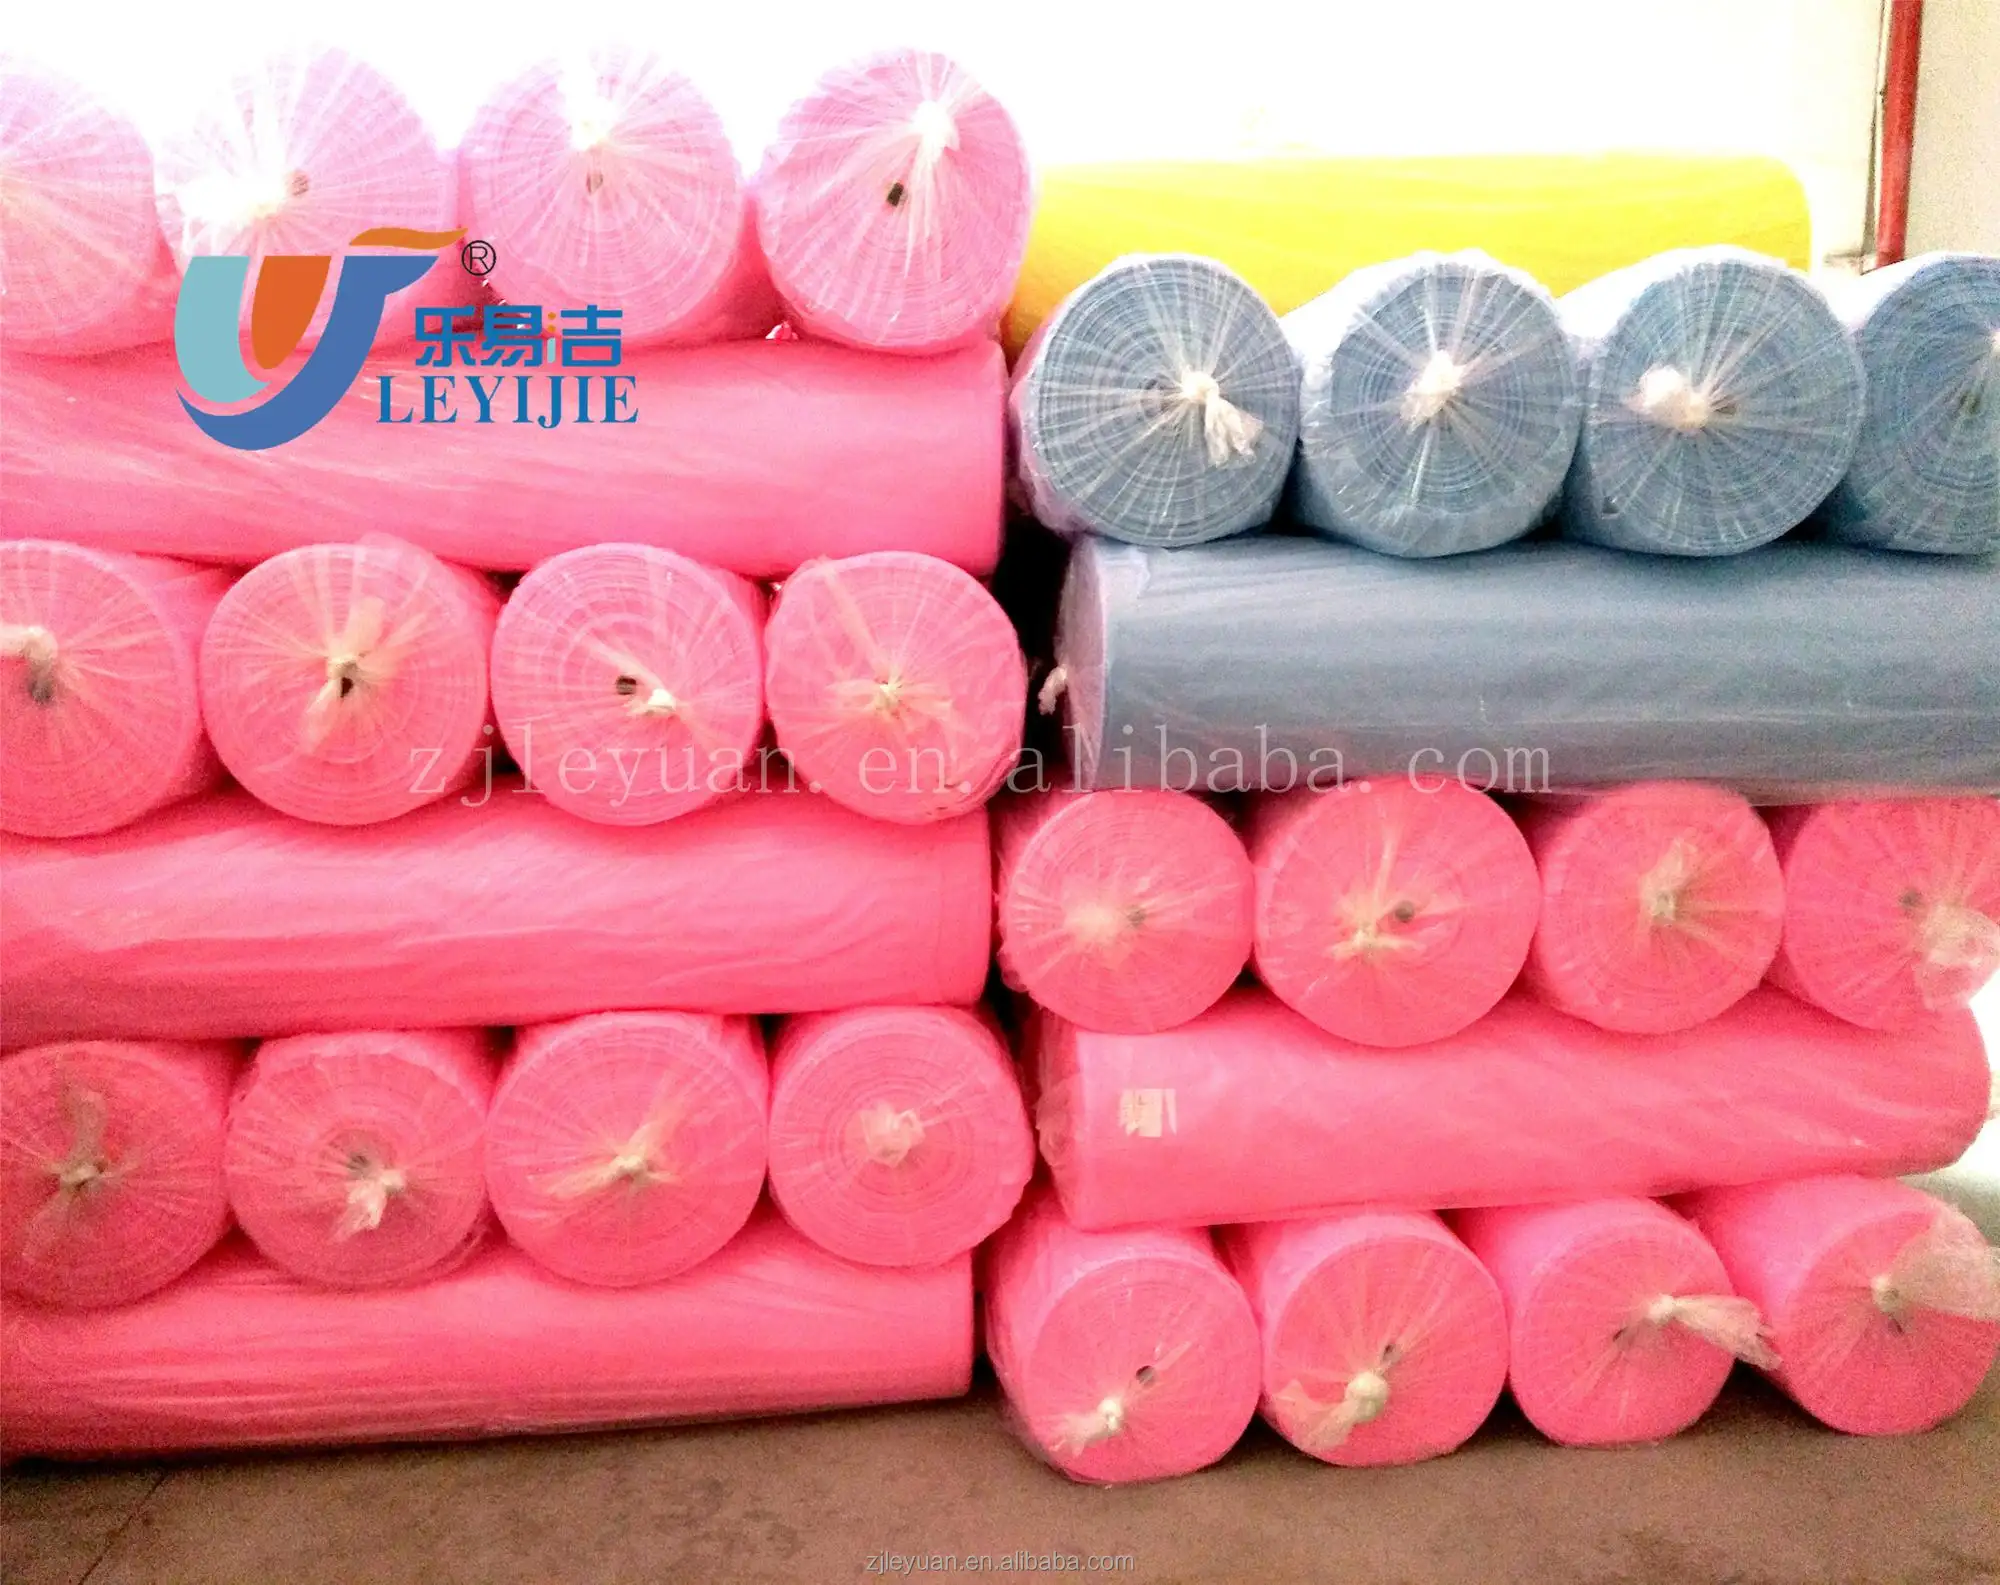 Nylon Fabric Wholesale New Fashion Cleaning Cloth/100%Nylon Message Fabric For Bathing.